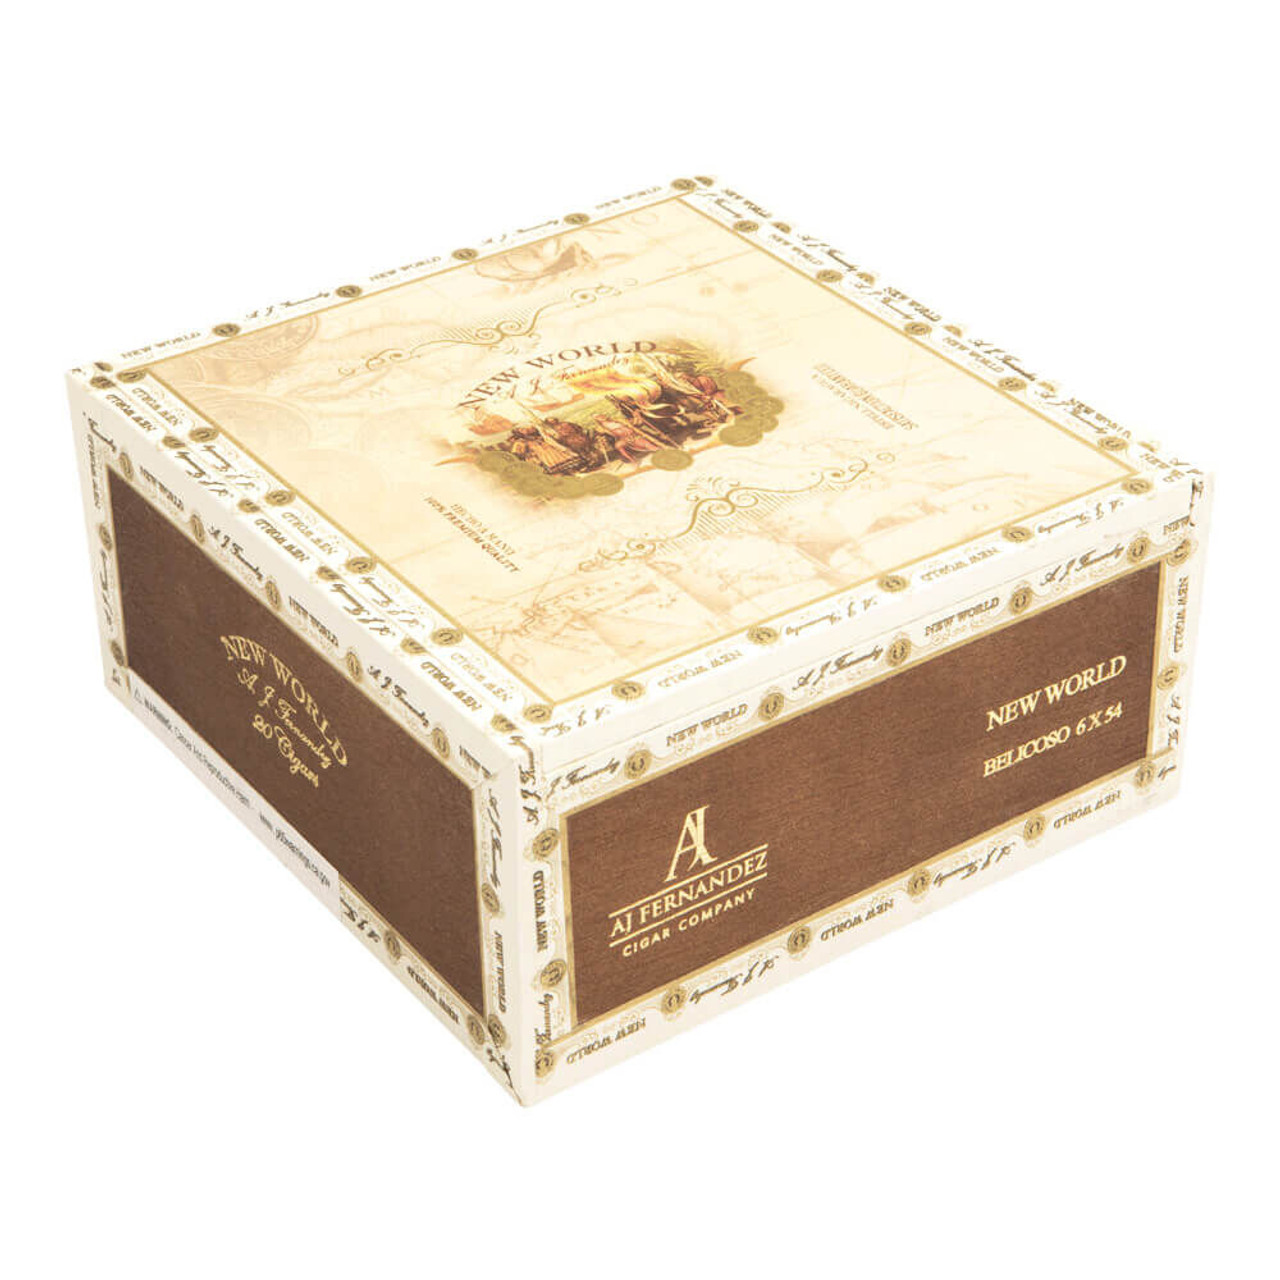 New World Connecticut by AJ Fernandez Belicoso Cigars - 6 x 54 (Box of 20) *Box